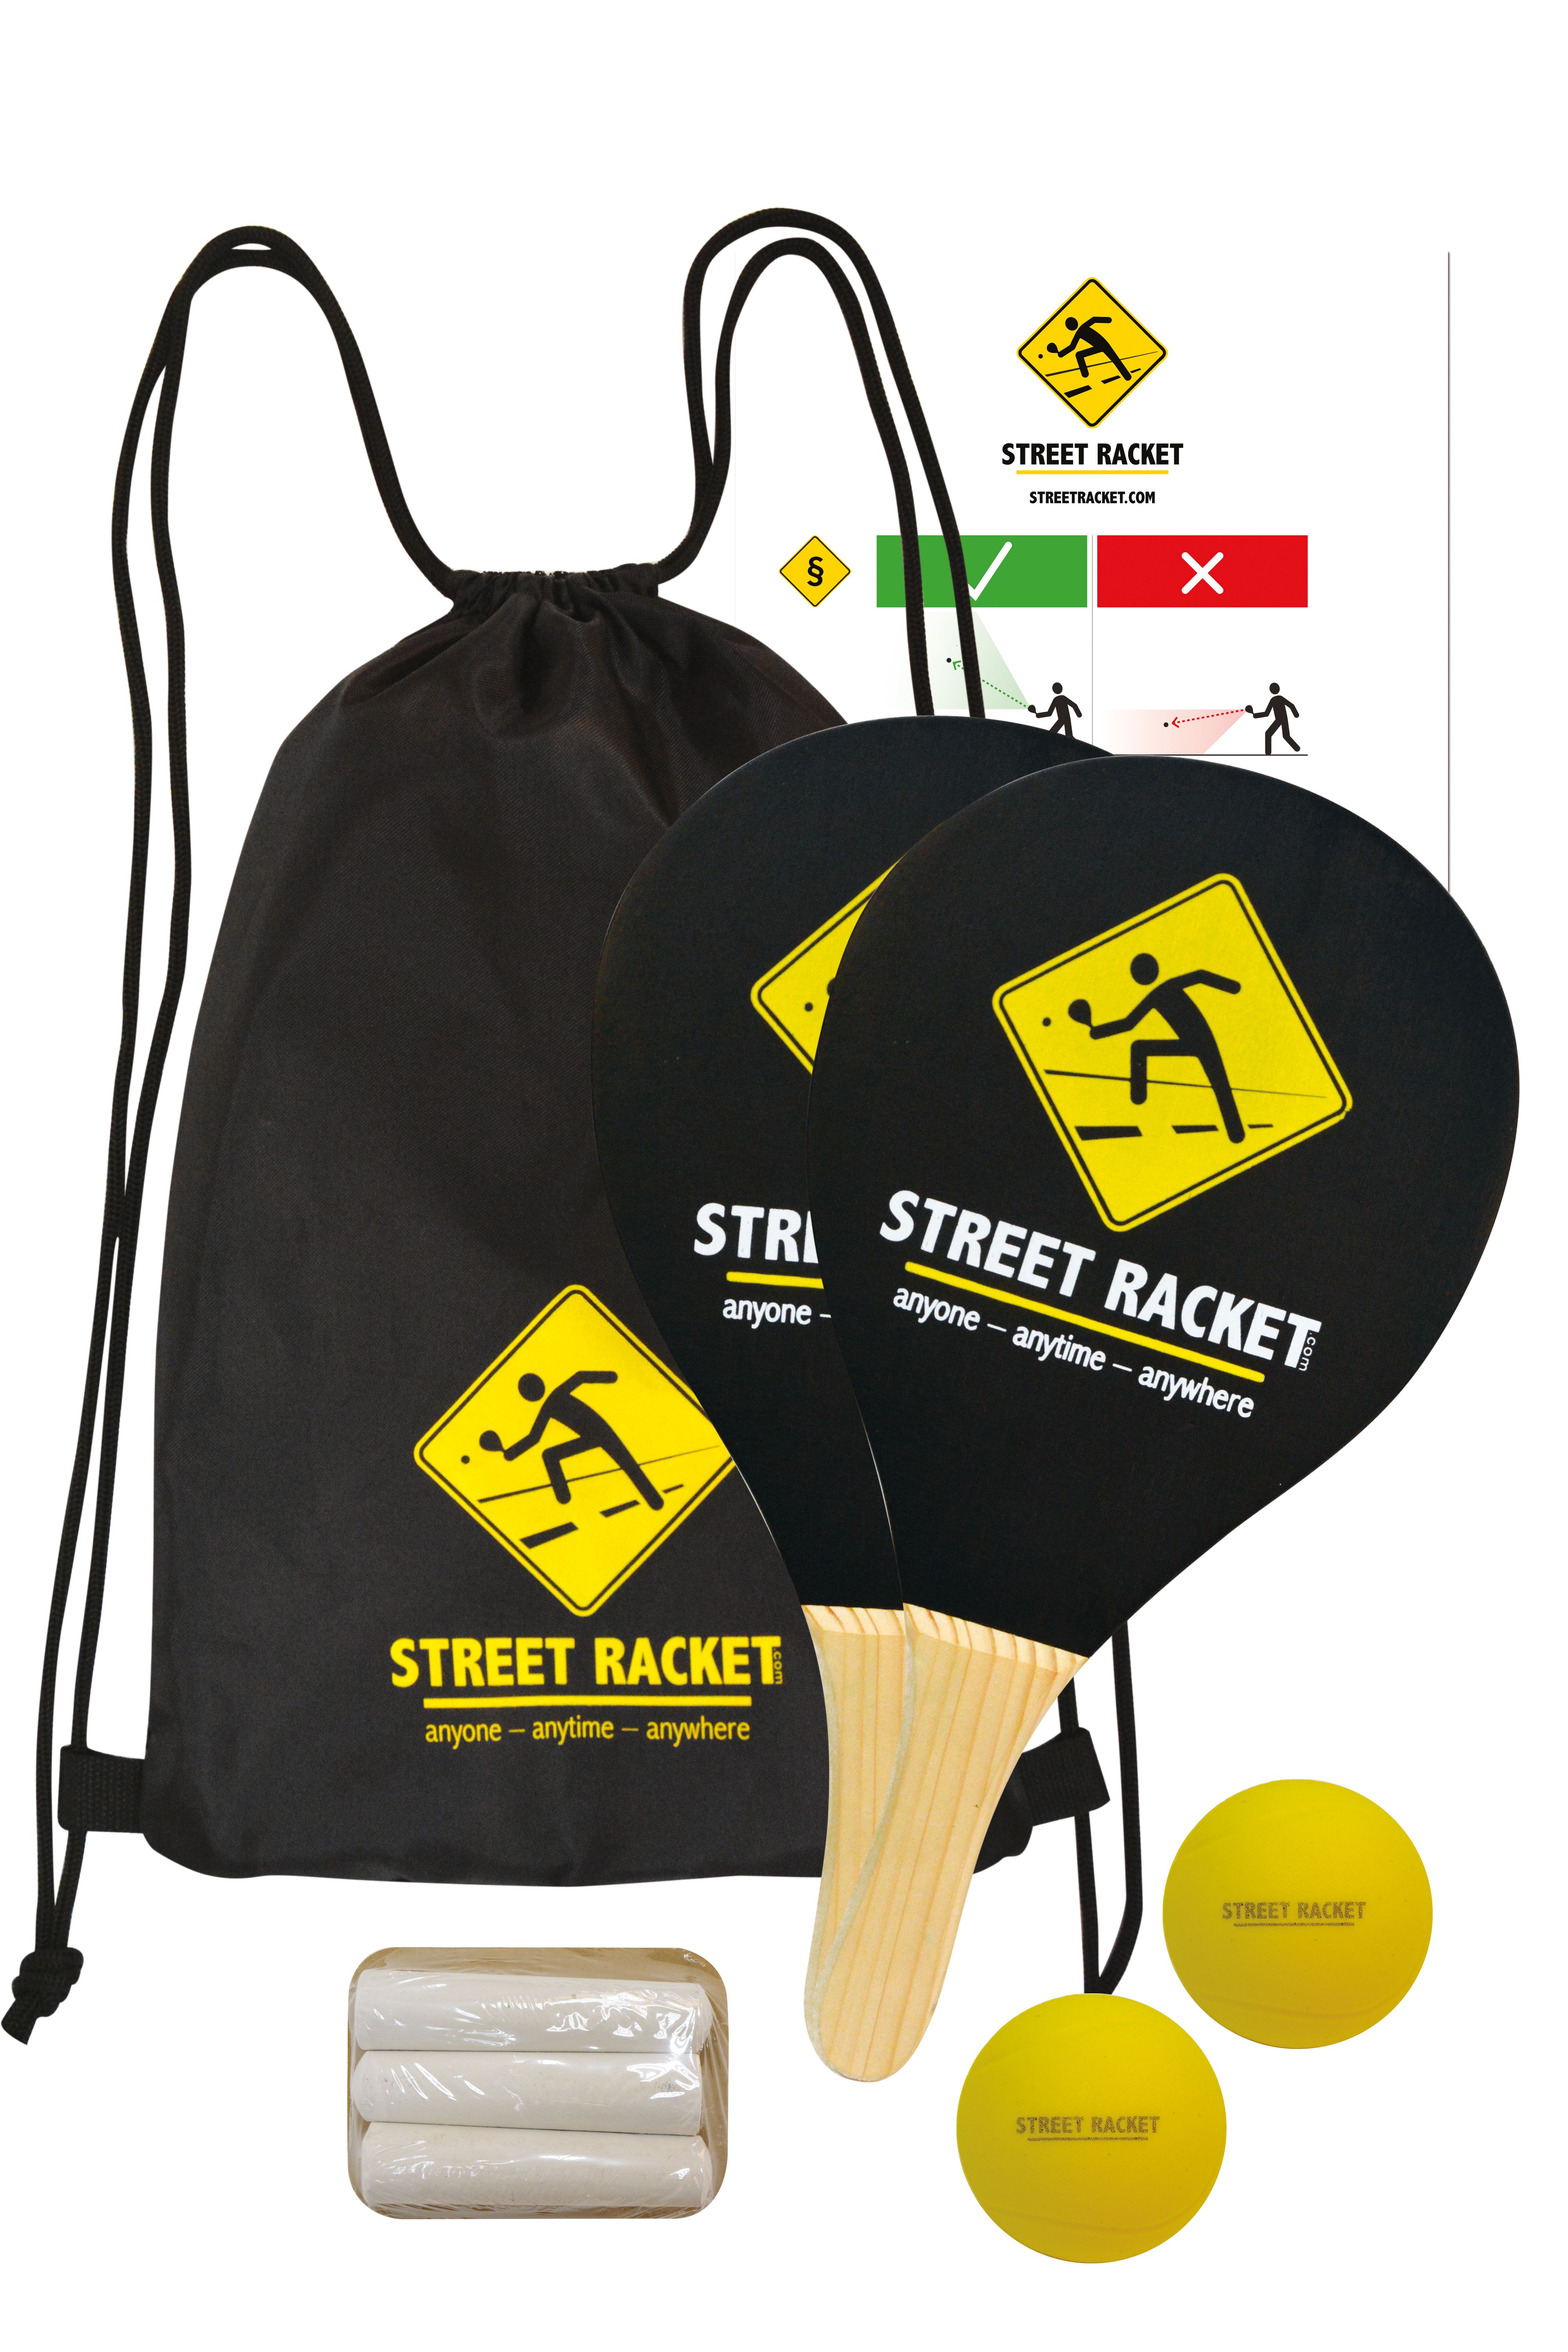 Street Racket 2 Player Set